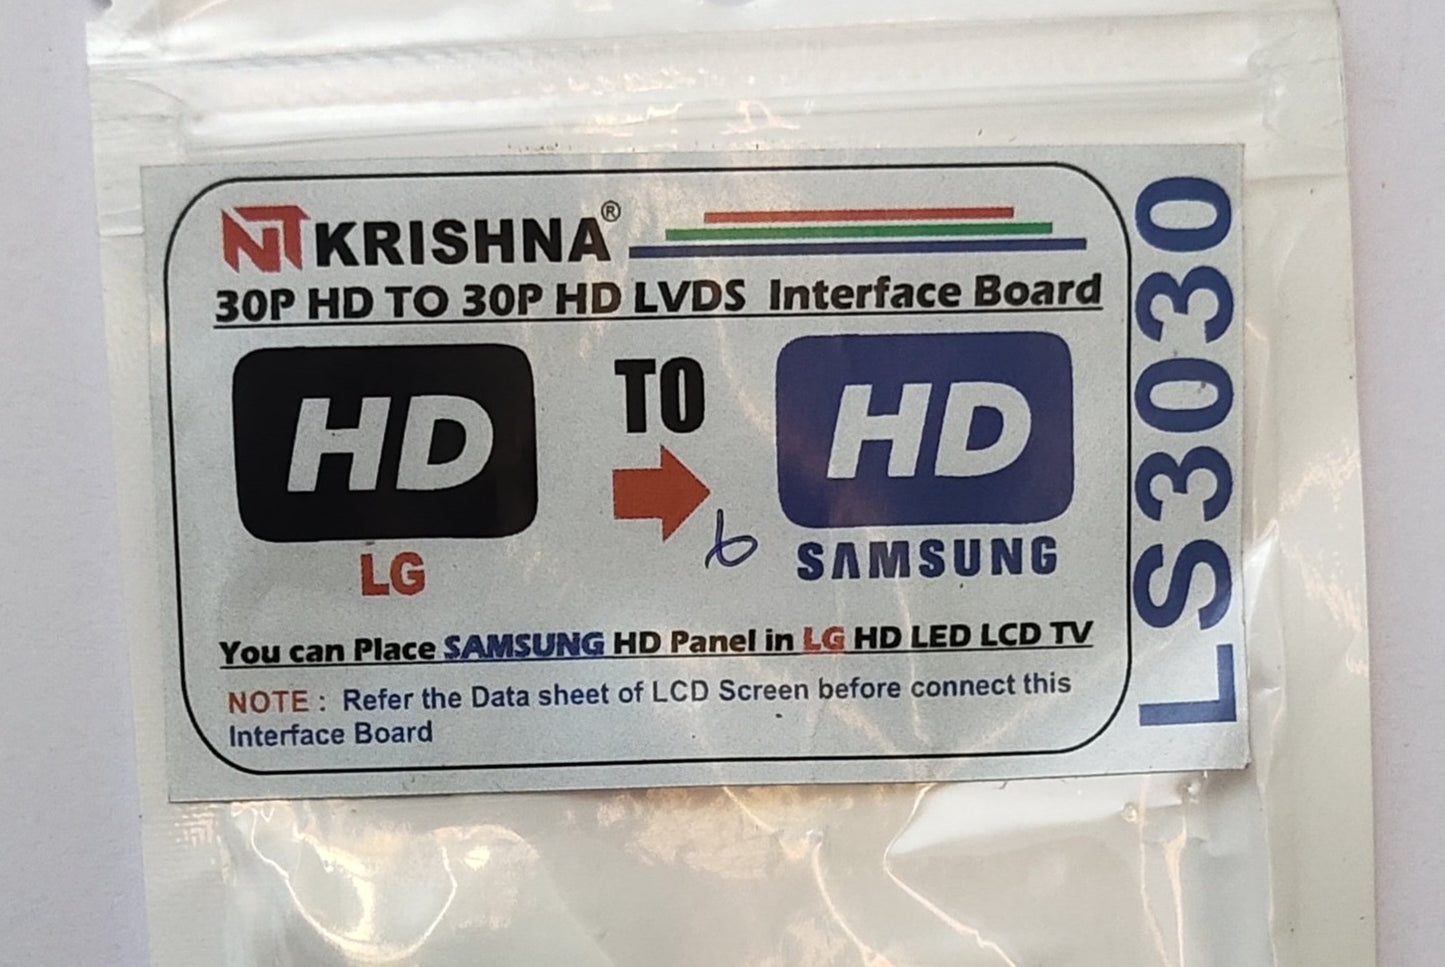 LG HD to Samsung HD 30P HD to 30P HD LVDS Interface Board LS3030 - Faritha